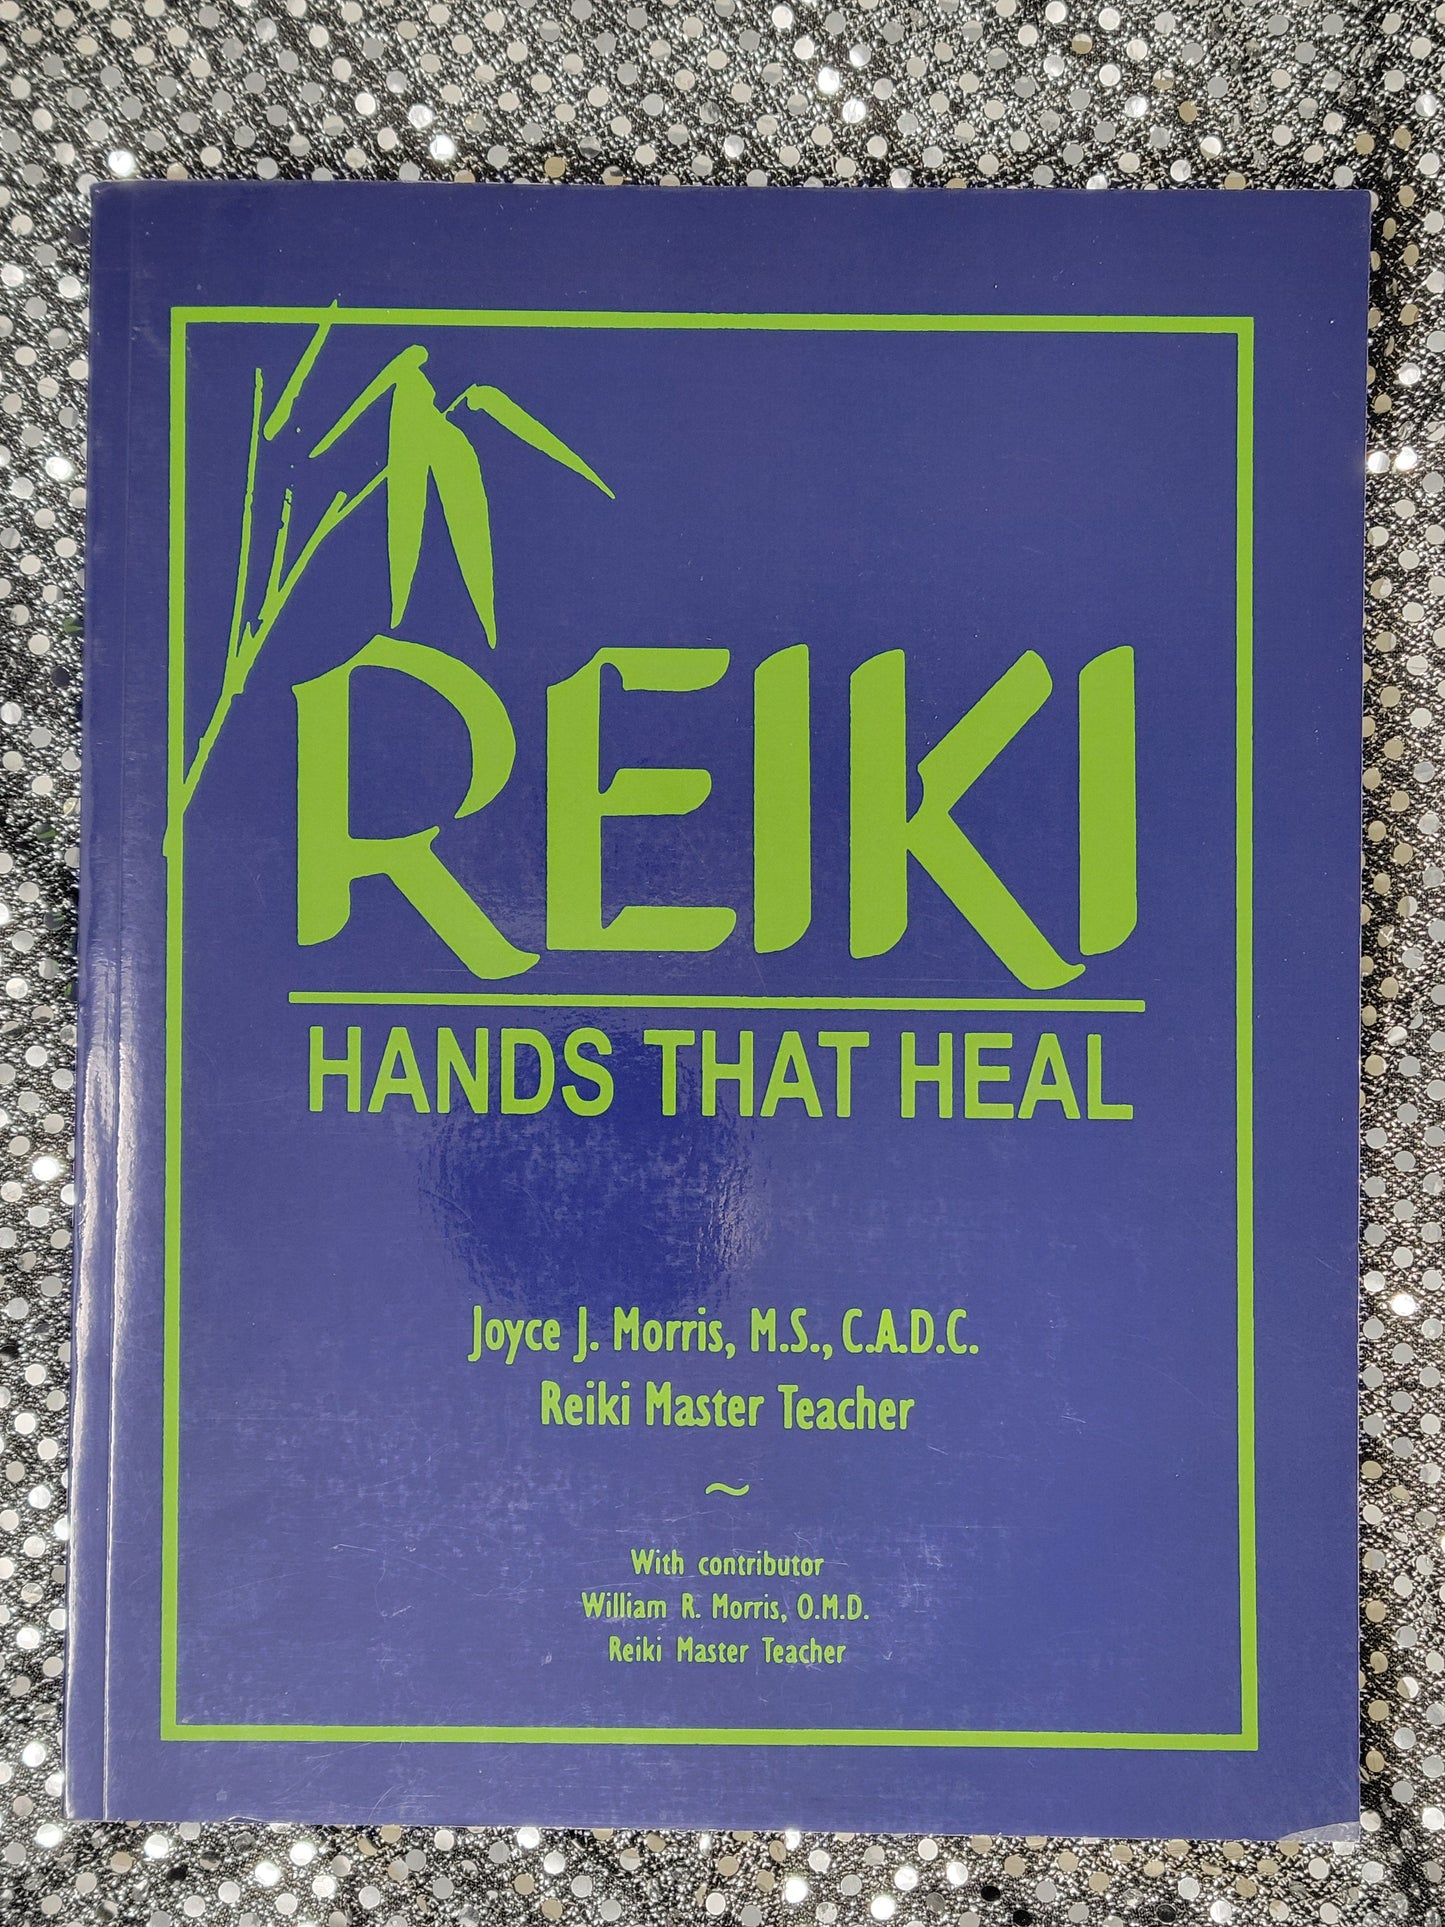 Reiki - Hands that Heal - Joyce J. Morris M.S., C.A.D.C.